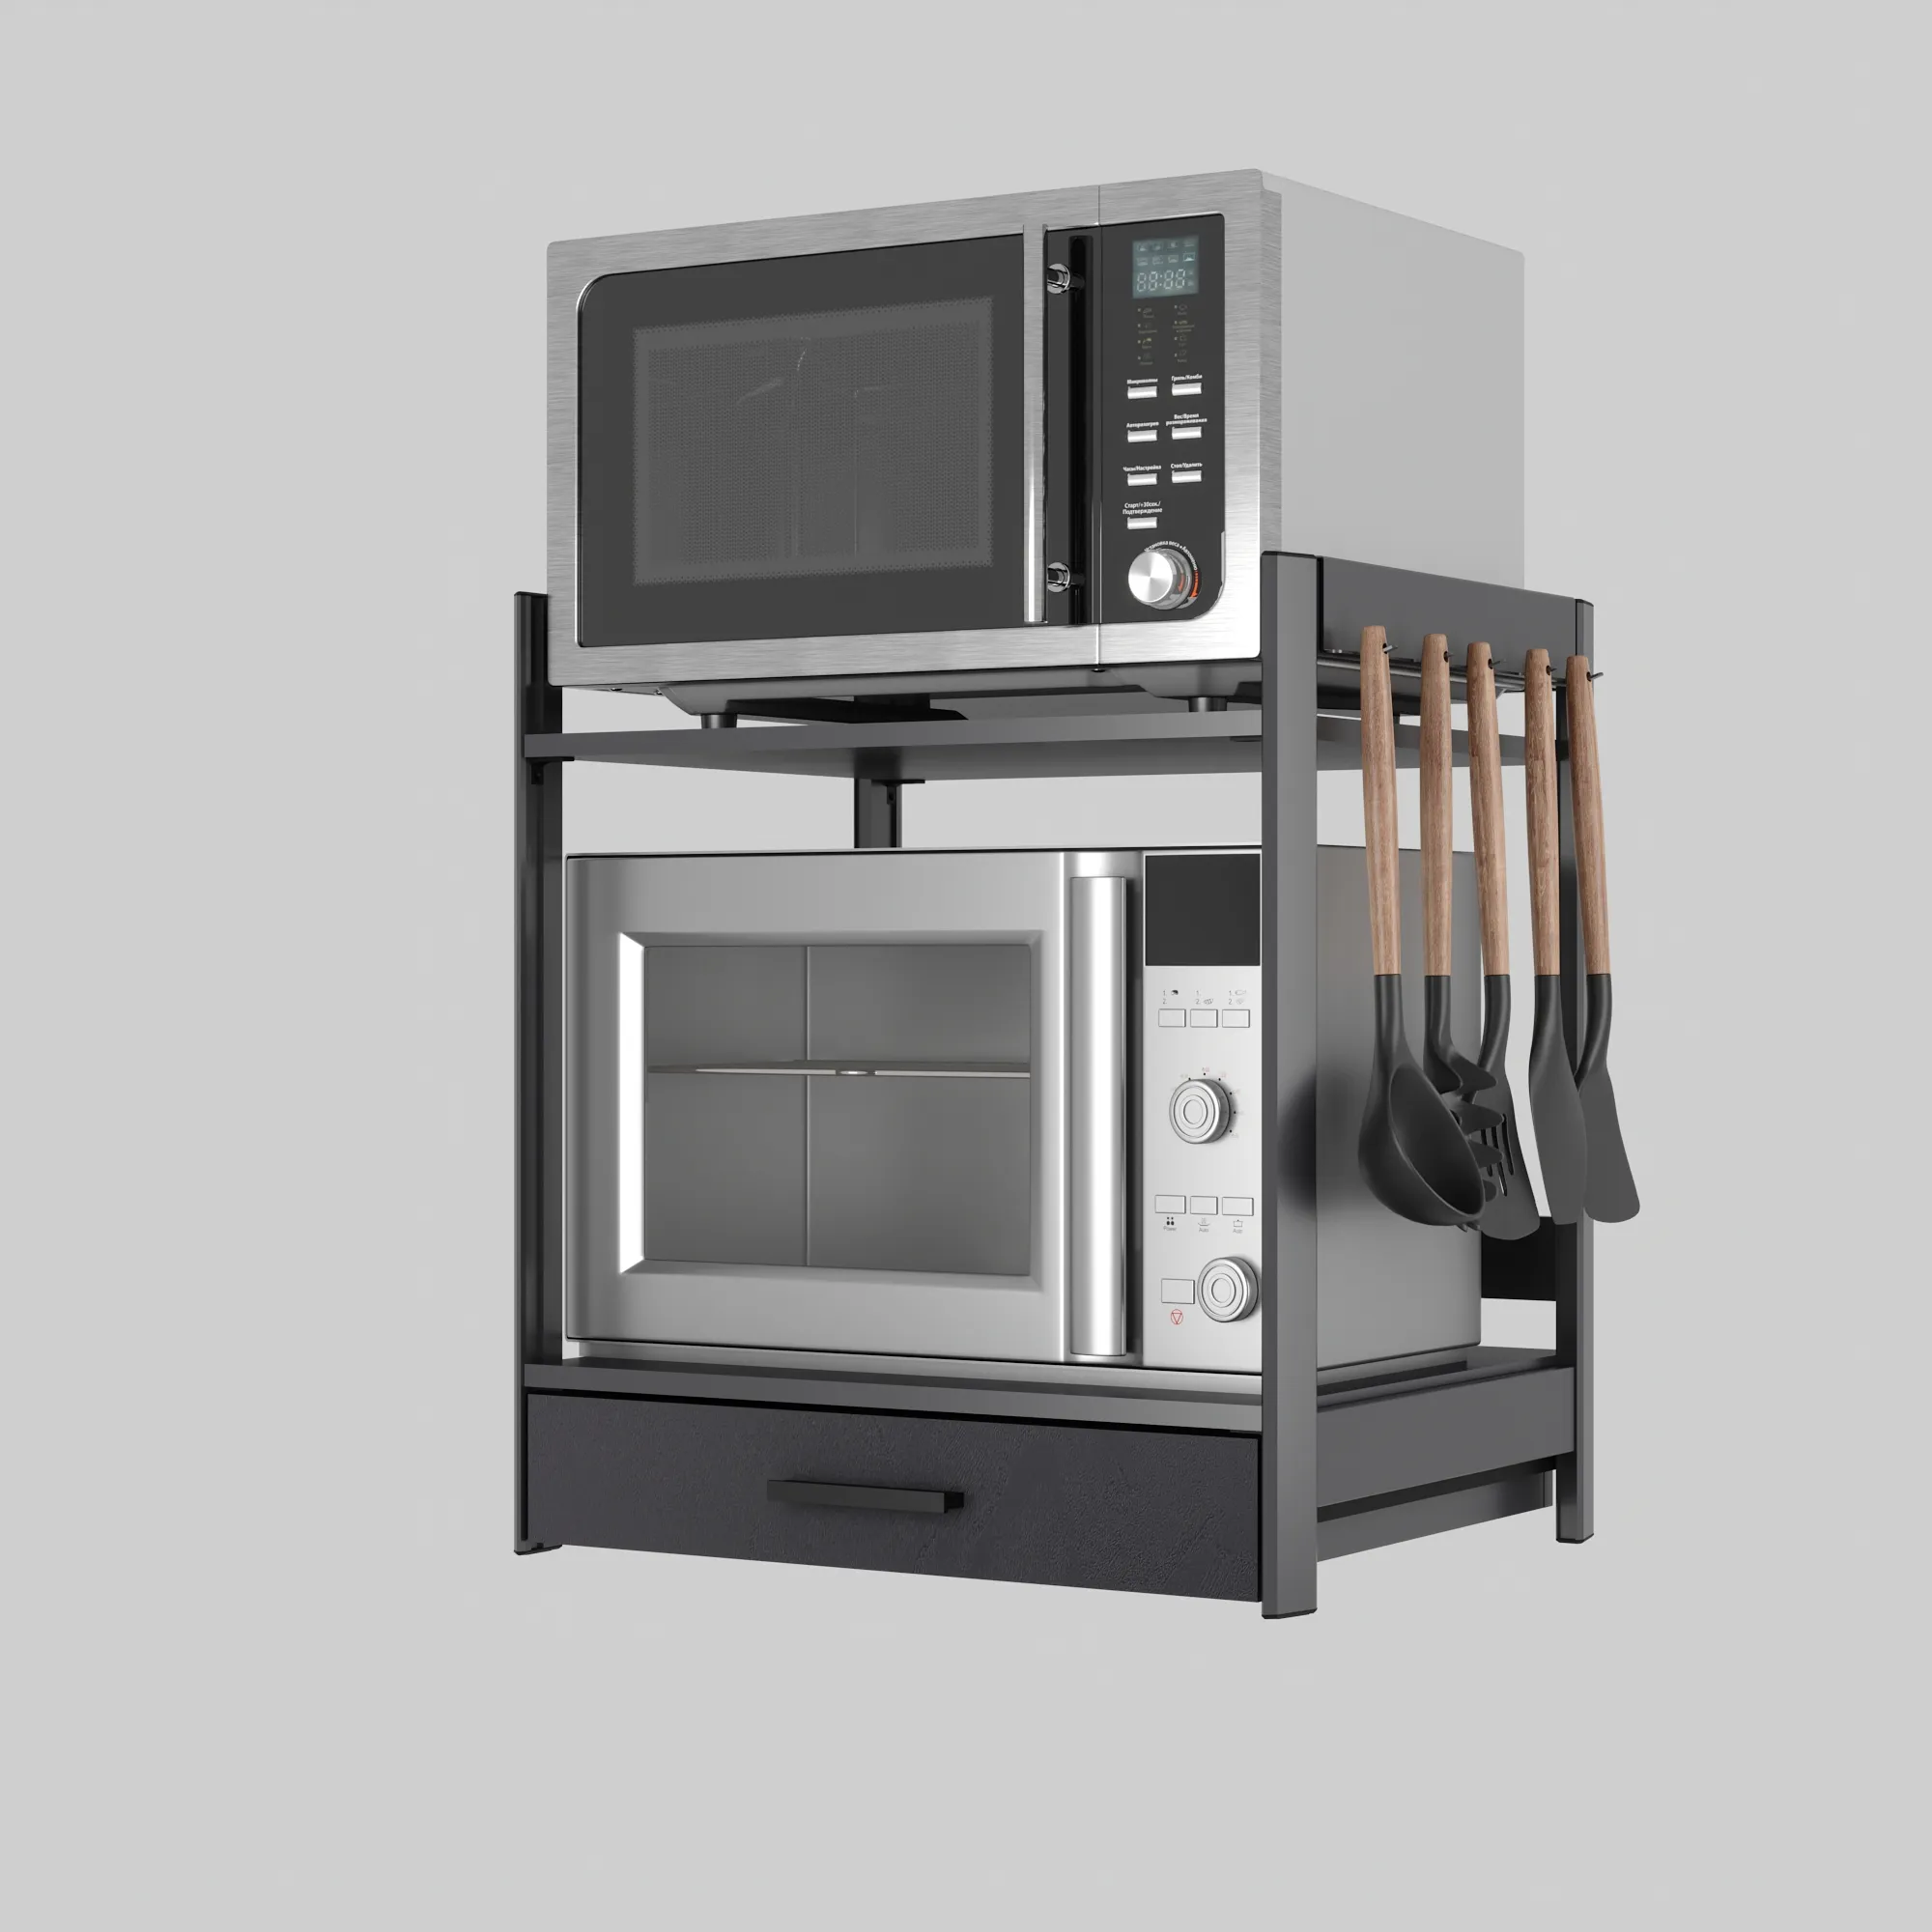 Cheap Price 3-Tier Heavy Load Microwave Shelf Stand Rack Kitchen Counter Storage Organizer Printer Shelf For Sale